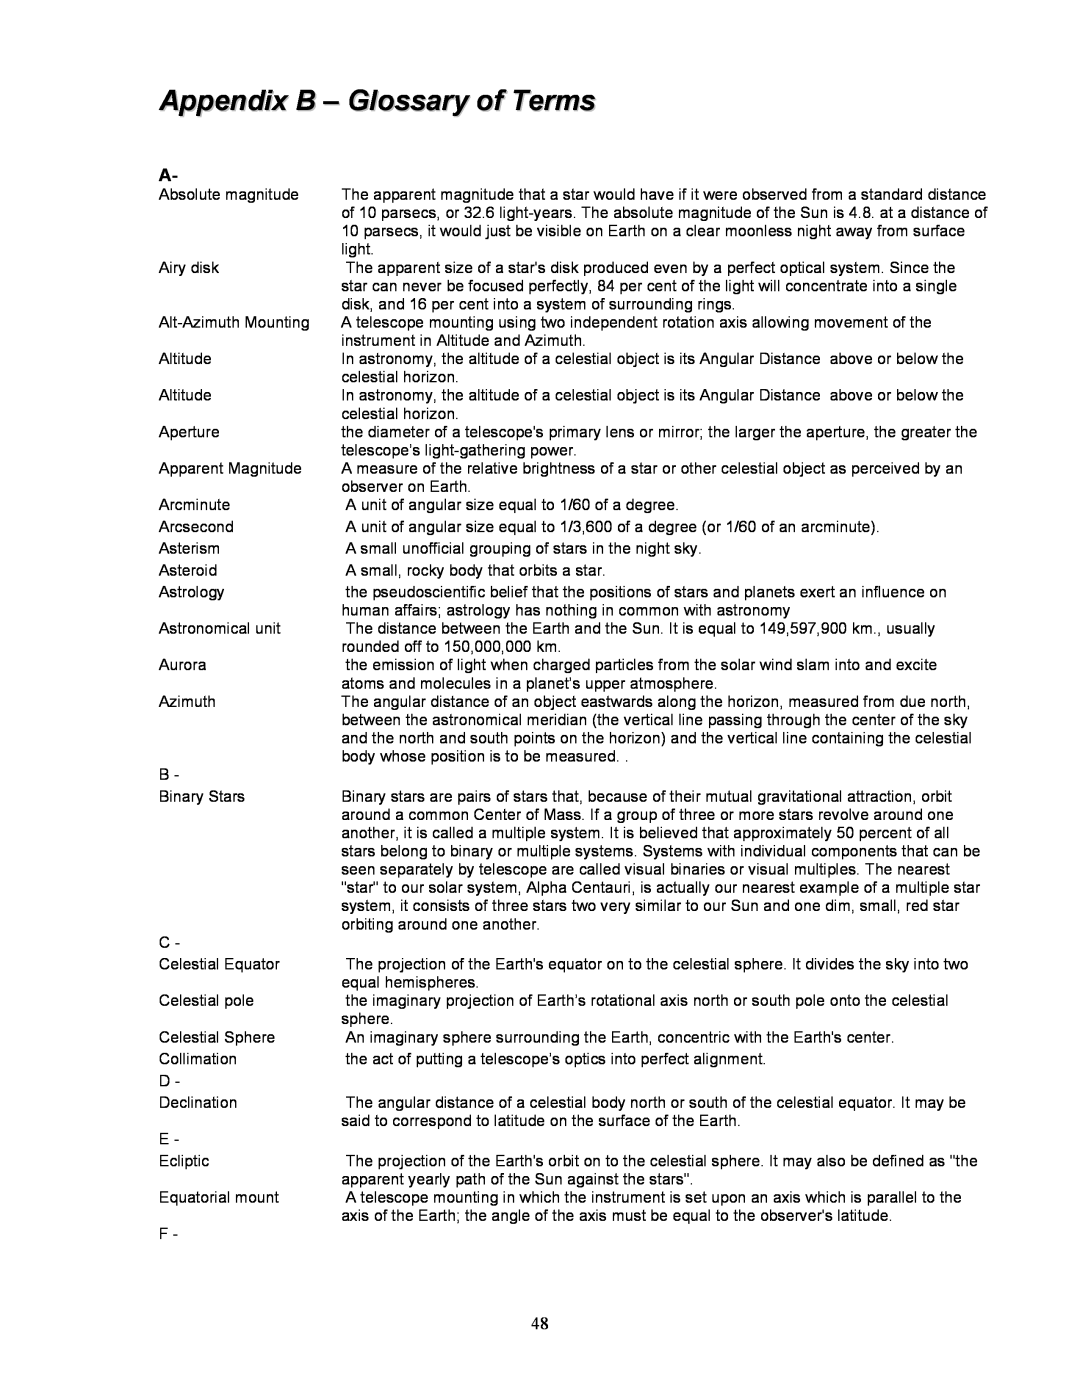 Celestron NexStar 8i manual Appendix B - Glossary of Terms 